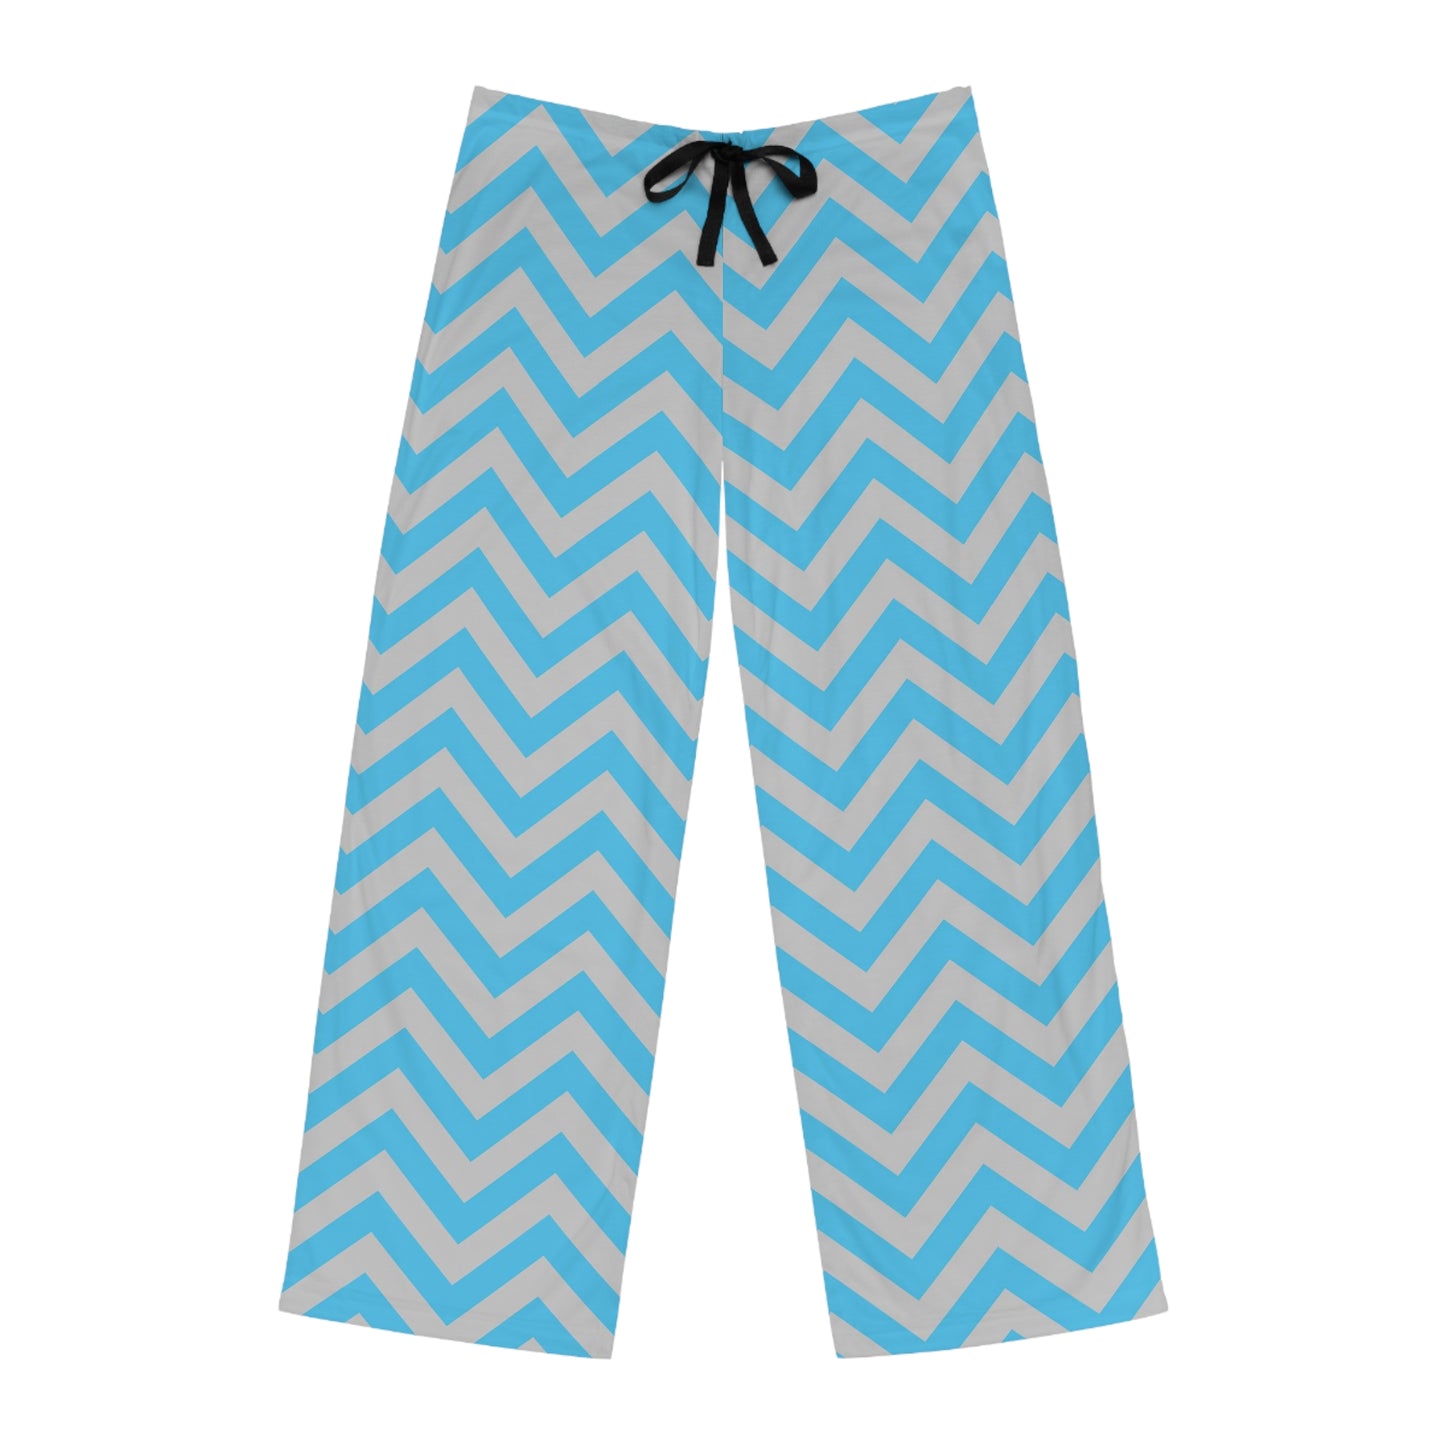 Men's blue/grey Golf Pajama Pants